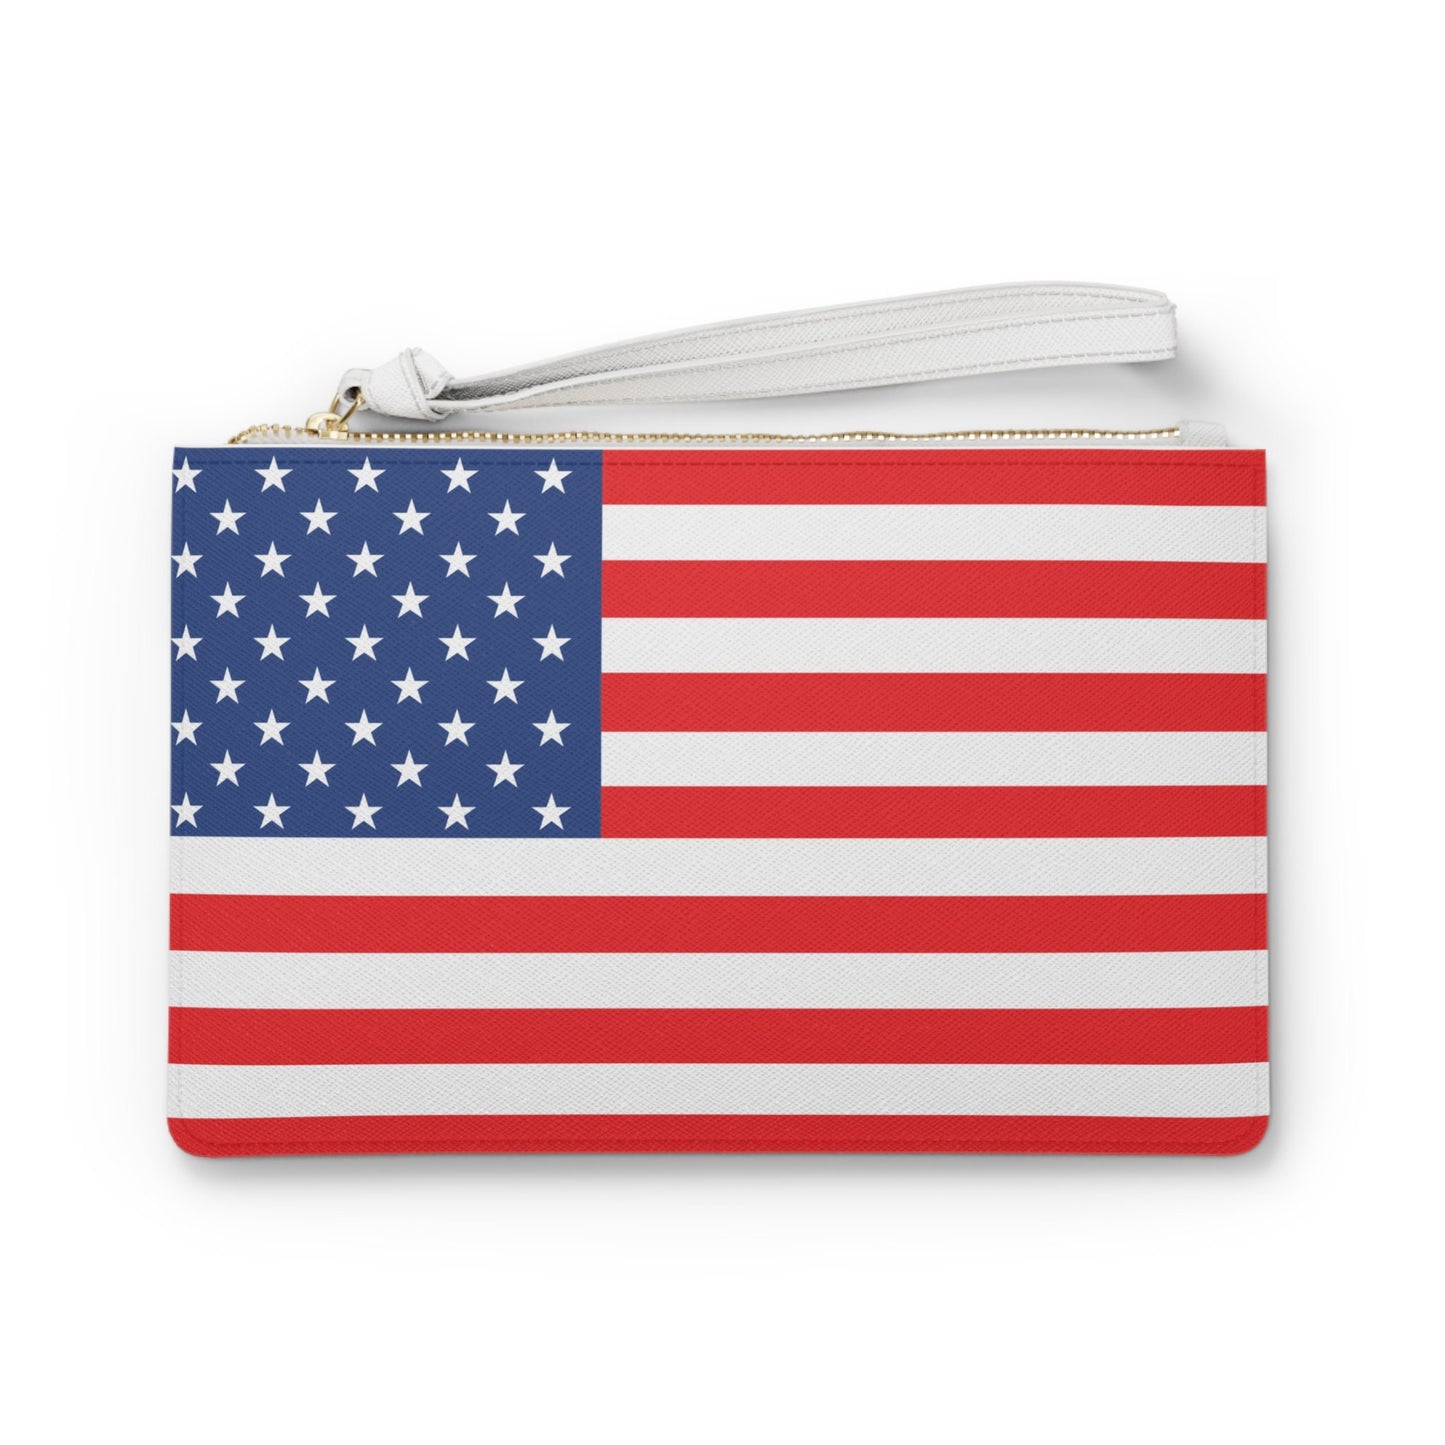 USA Flag Clutch Bag